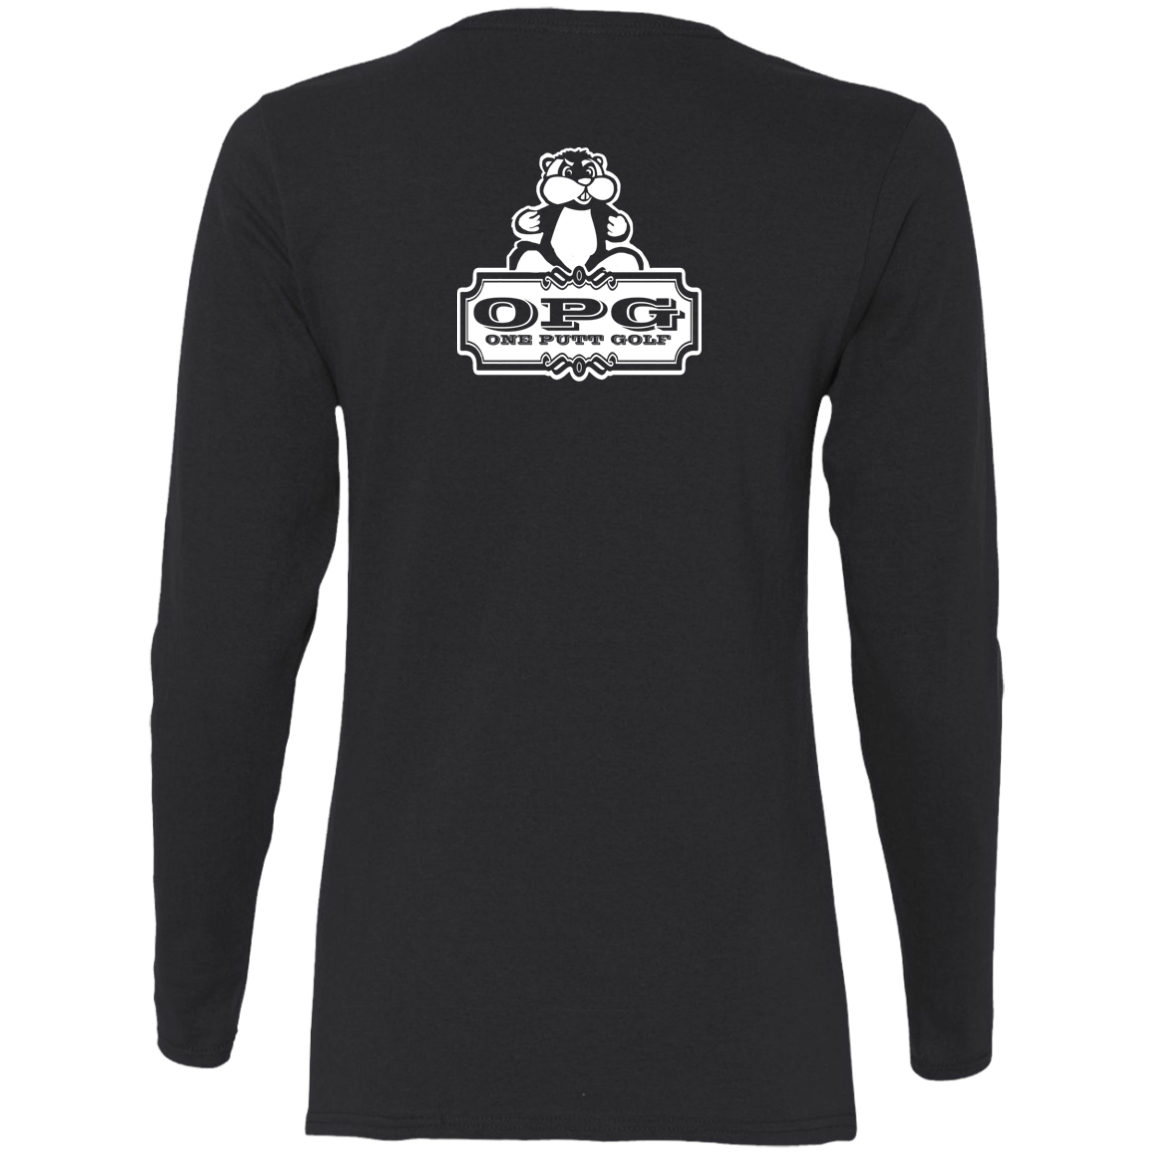 OPG Custom Design #29. Who's Your Caddy? Caddy Shack Bill Murray Fan Art. Ladies' 100% Cotton T-Shirt